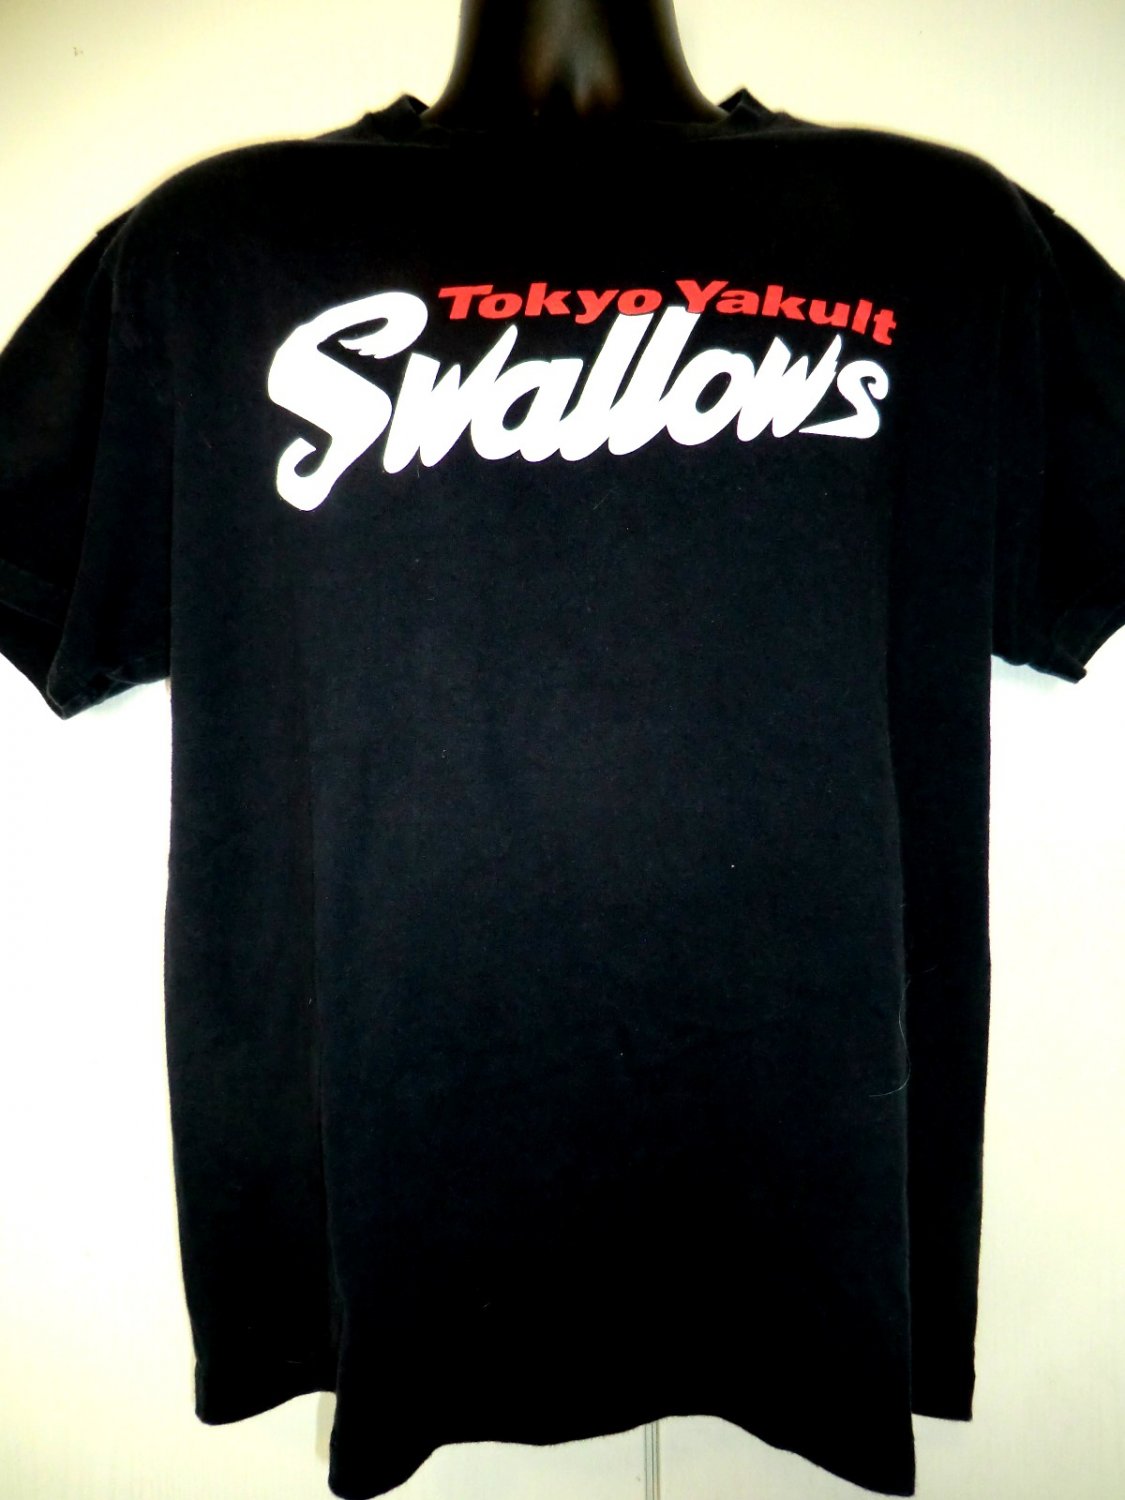 The Tokyo Yakult Swallows baseball team gave away this shirt on Ladies Day.  : r/pics